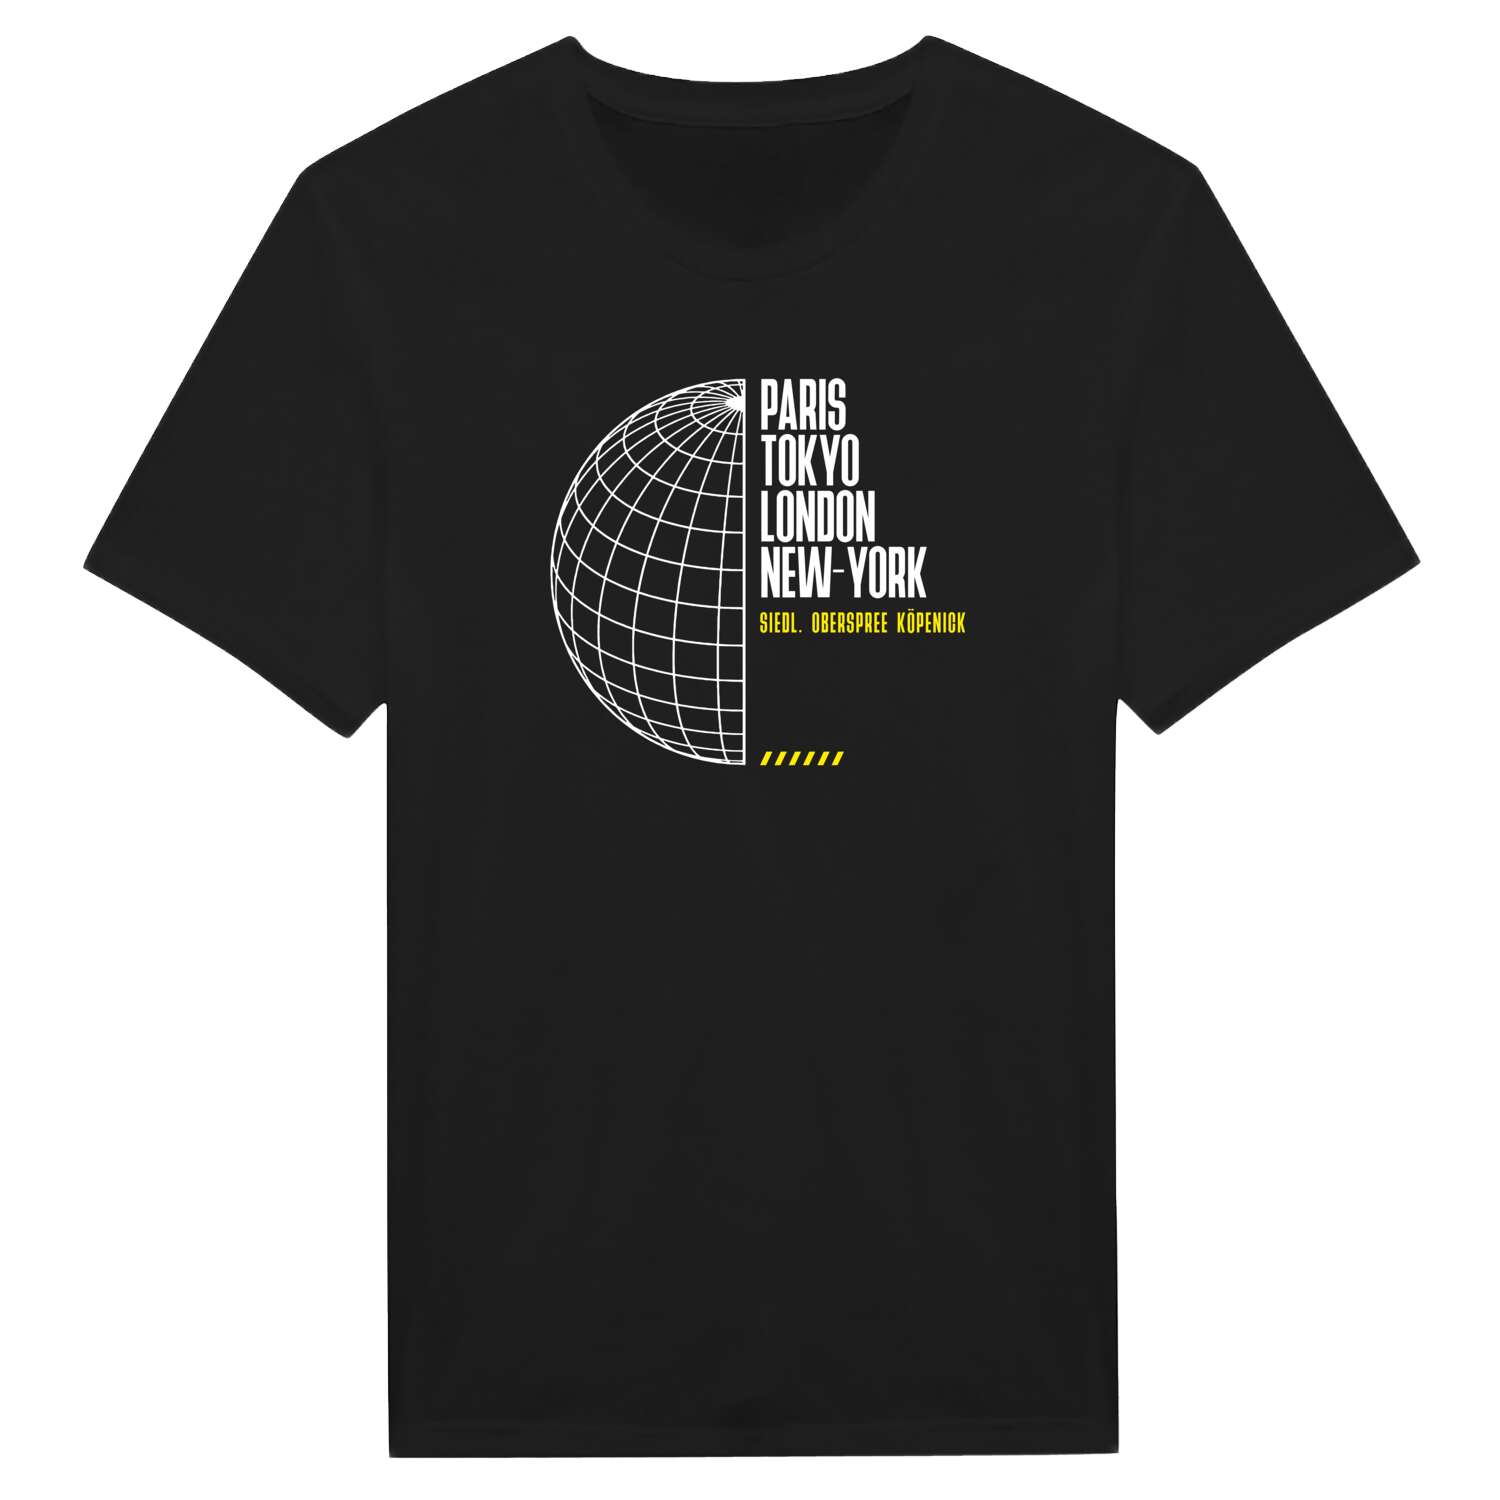 Siedl. Oberspree Köpenick T-Shirt »Paris Tokyo London«